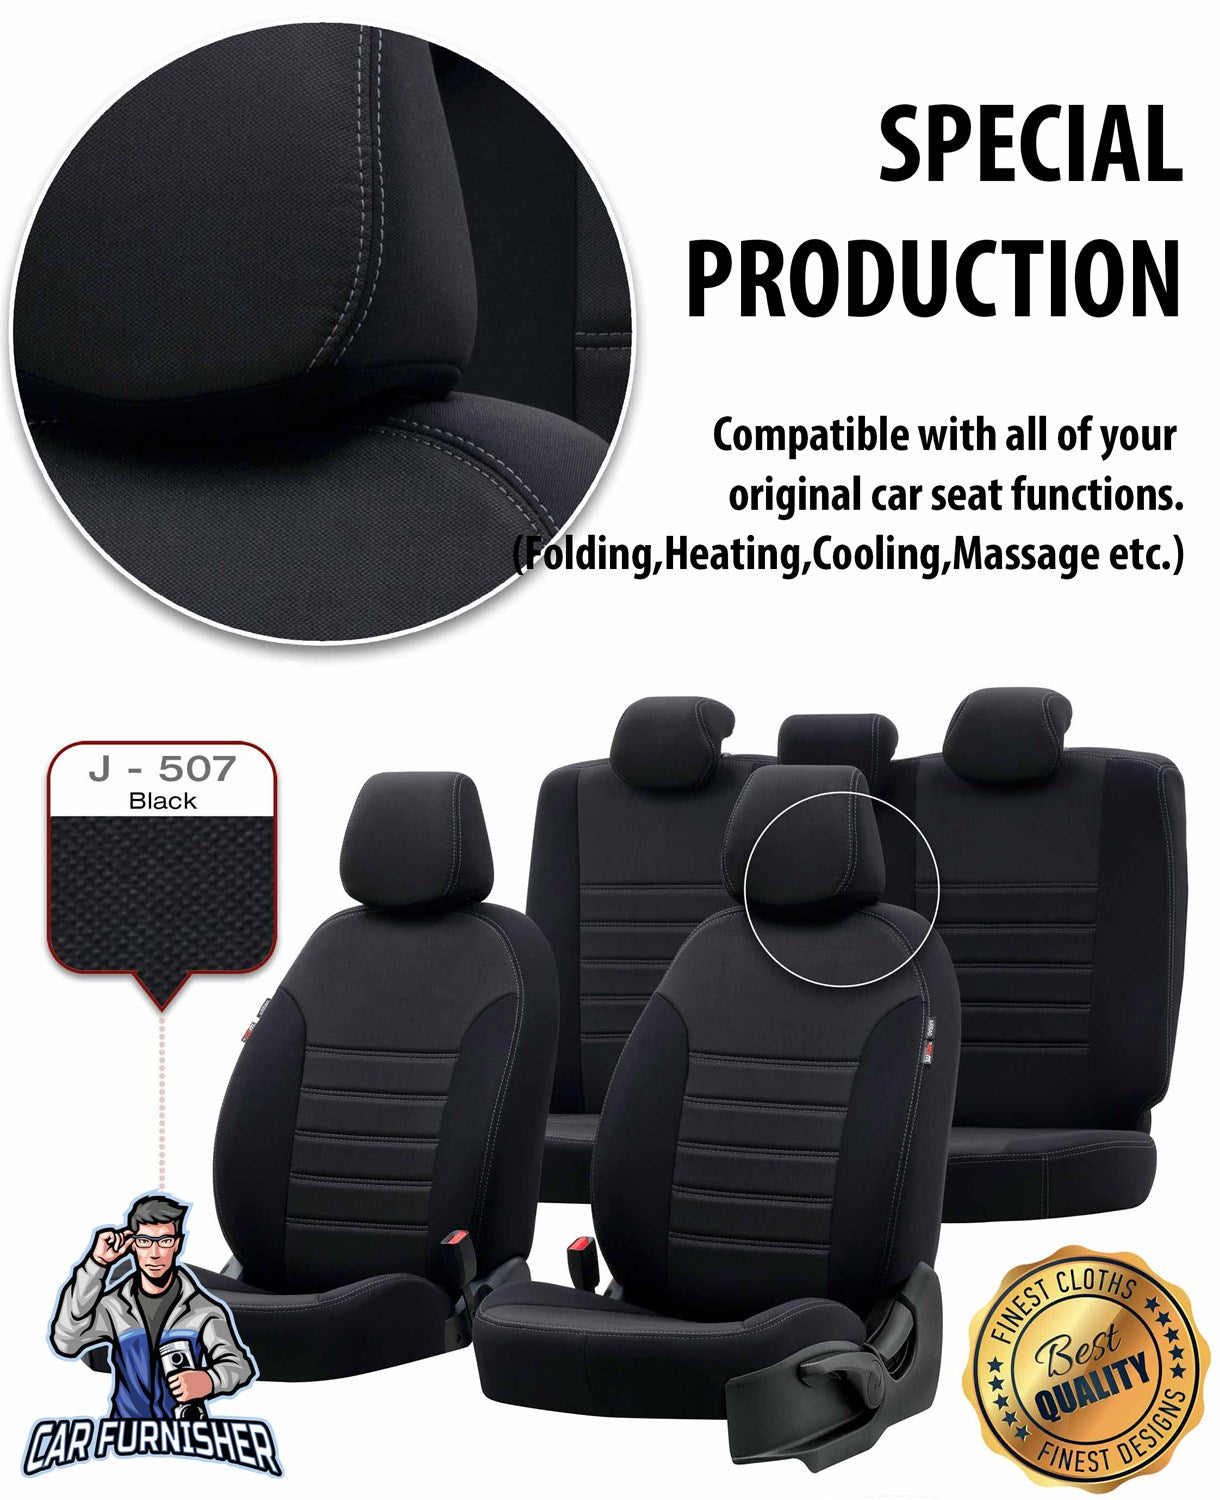 Chery Tiggo Car Seat Covers 2008-2011 Original Design Dark Gray Full Set (5 Seats + Handrest) Fabric